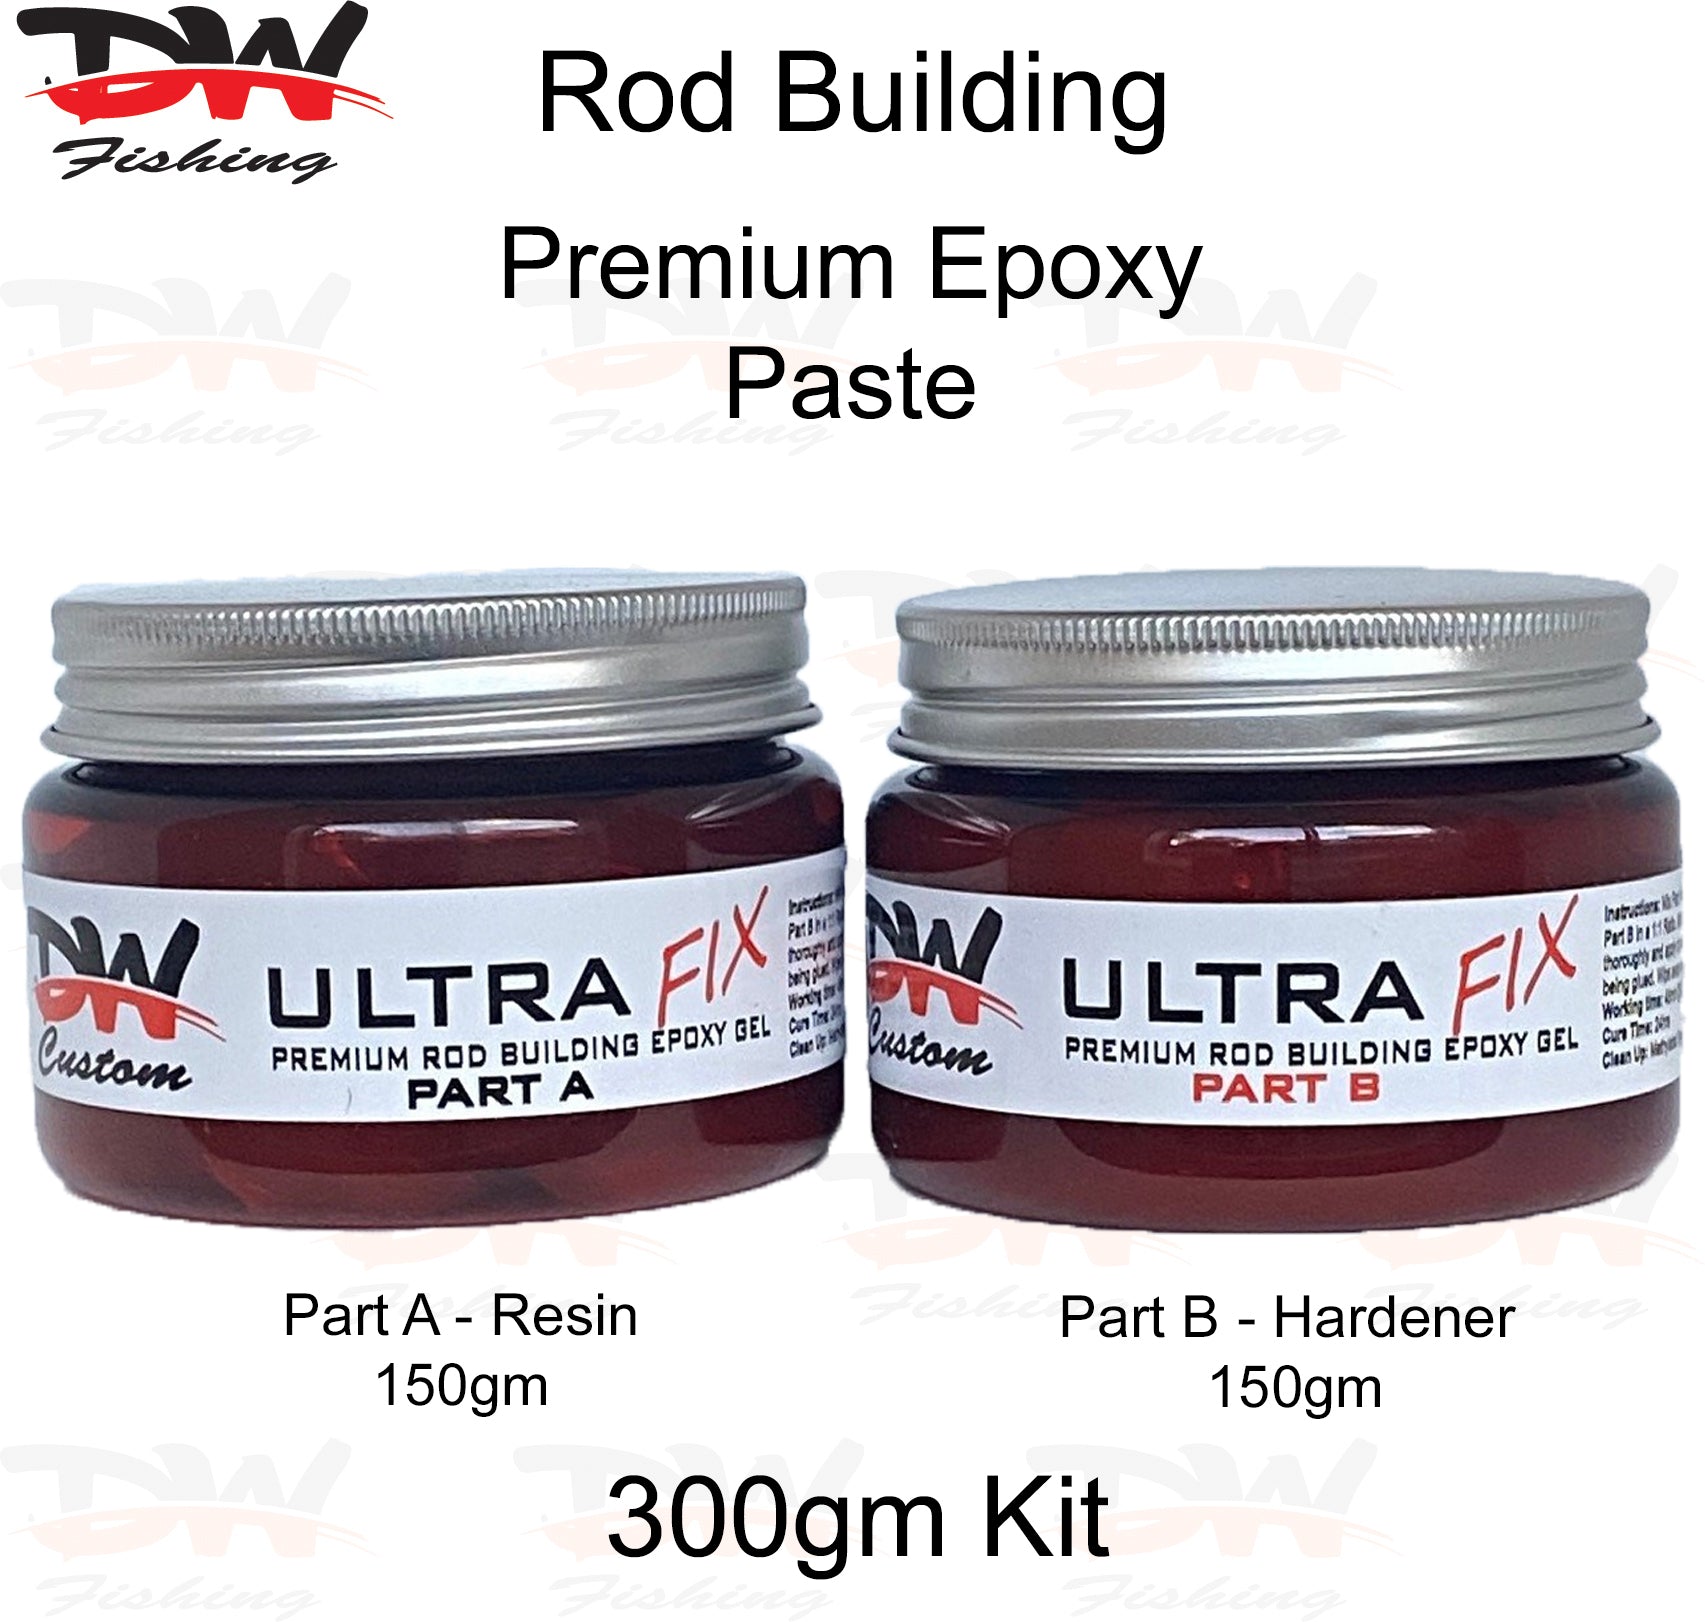 Ultra Fix premium rod building epoxy paste gel 300gm kit 2 part epoxy paste for fishing rod building